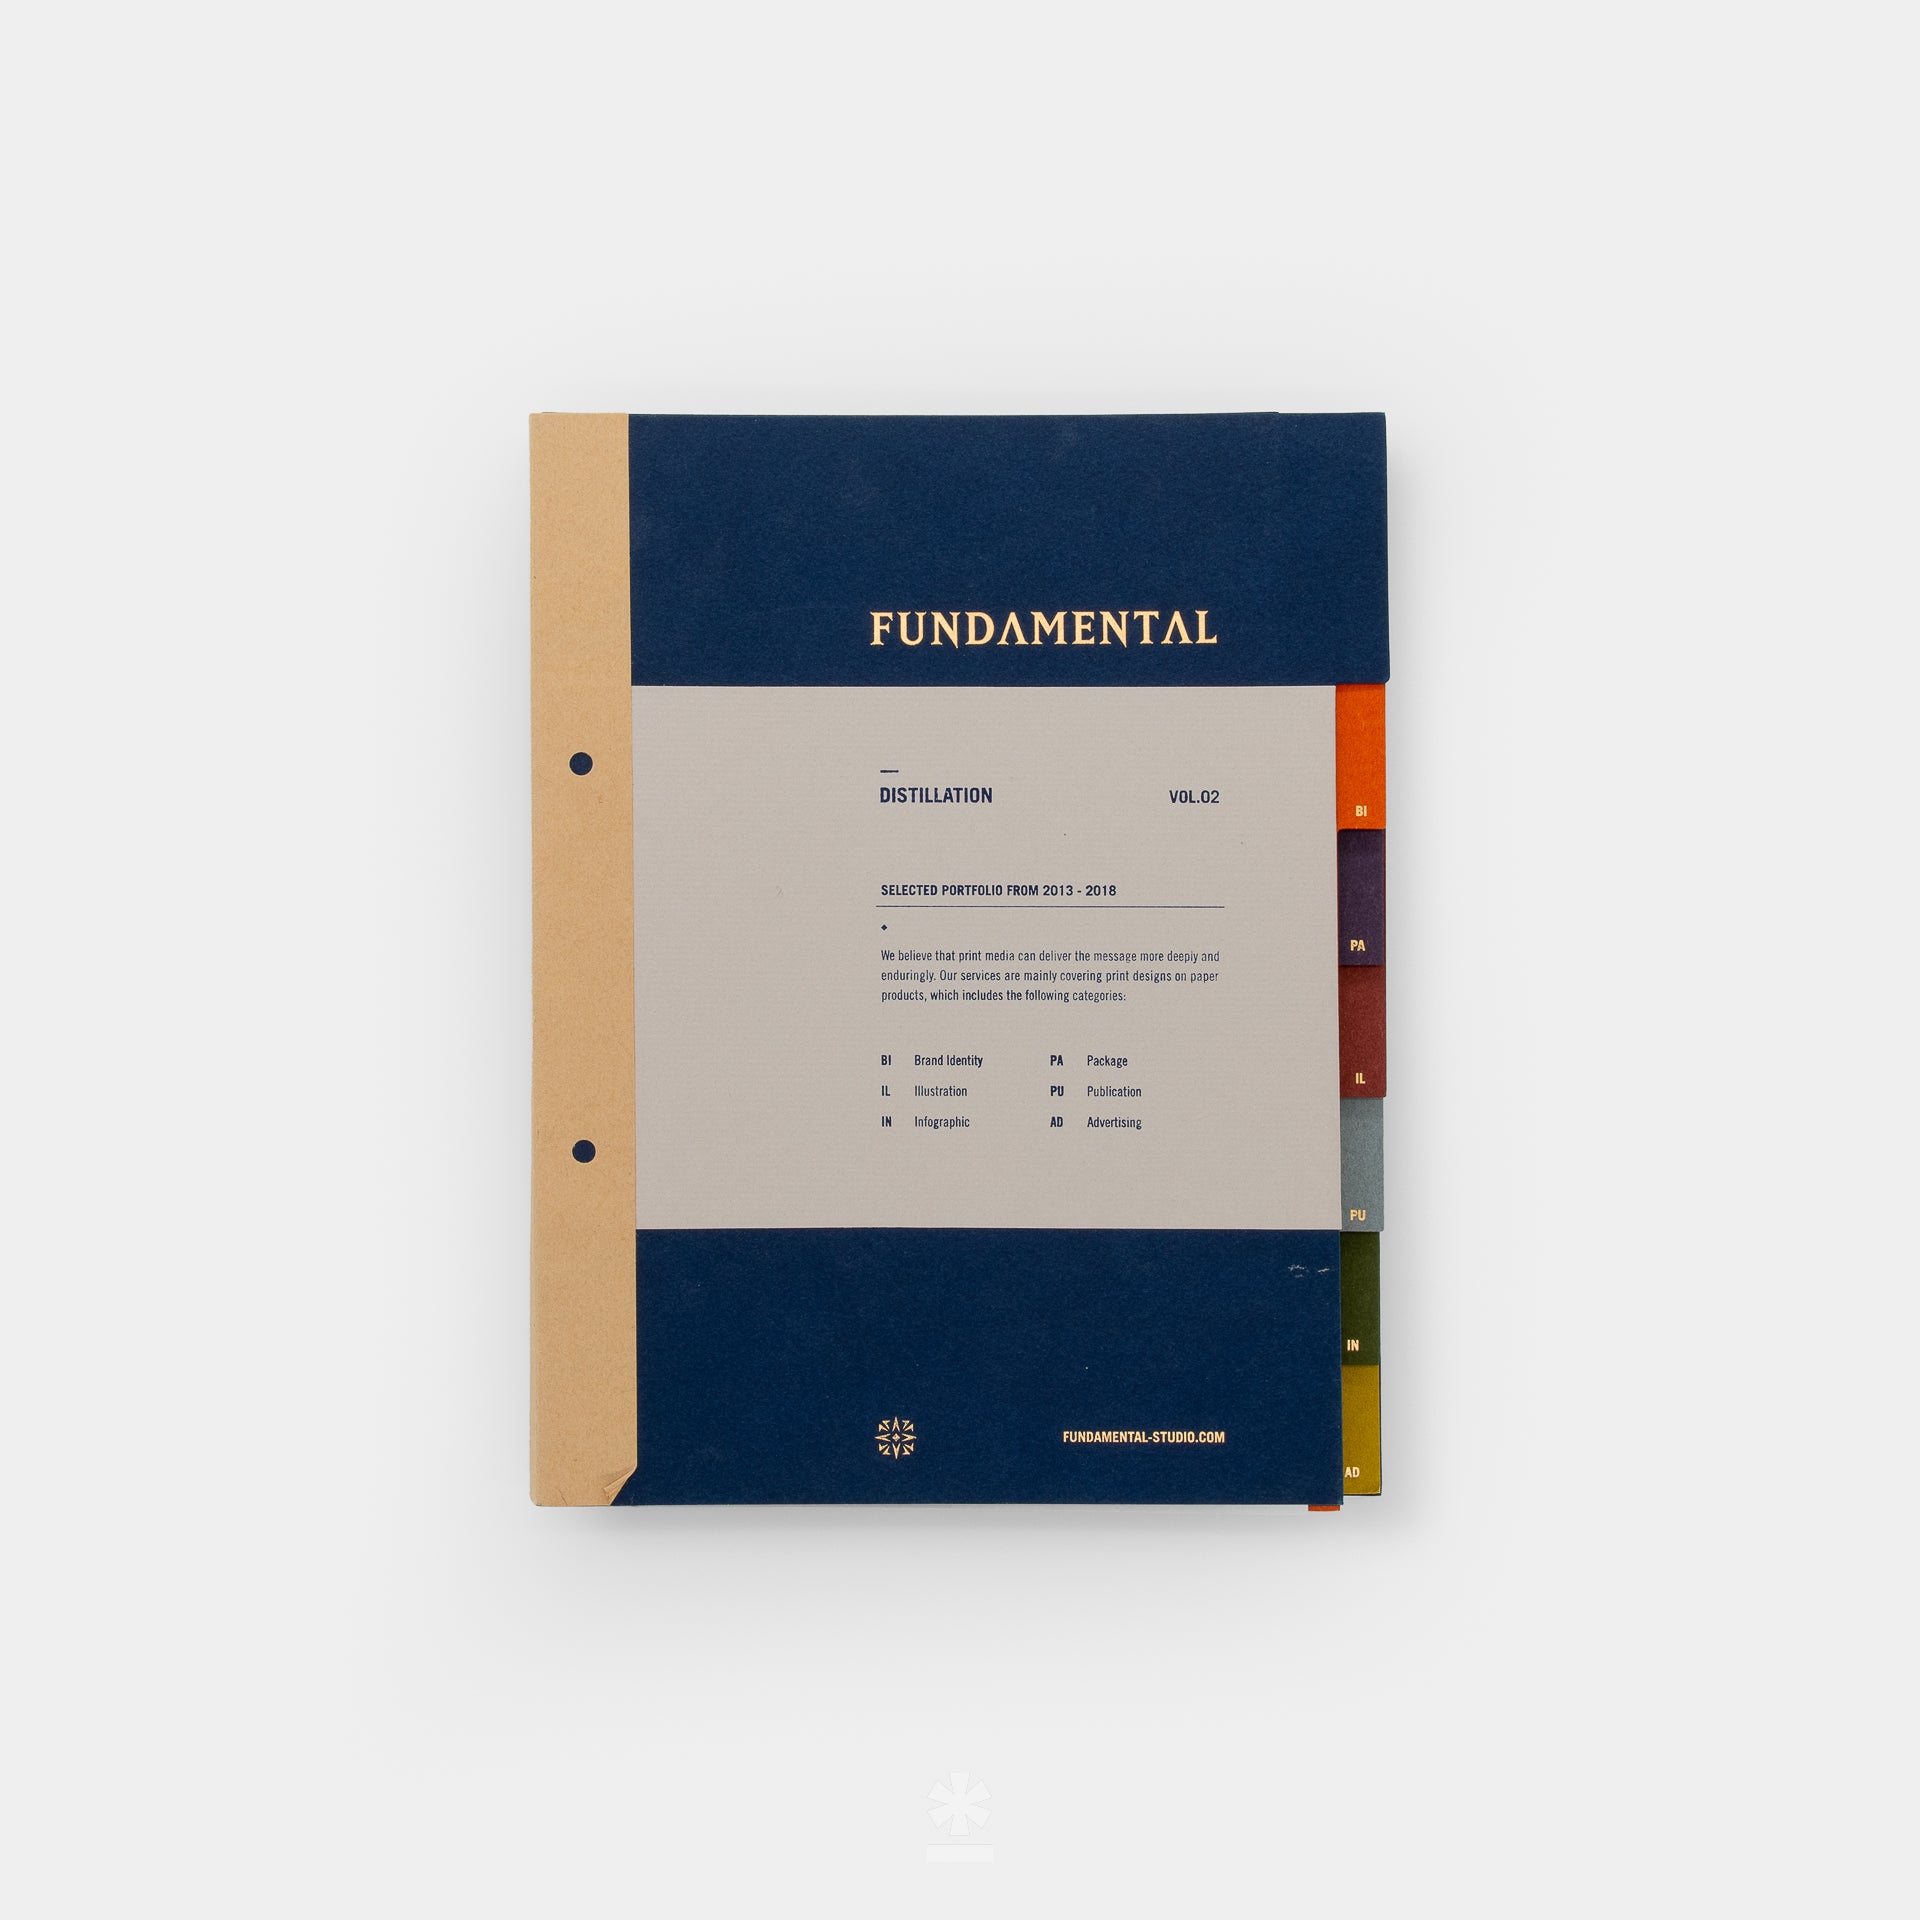 Fundamental Studio: Distillation Vol. 02, Selected Portfolio from 2013 - 2018